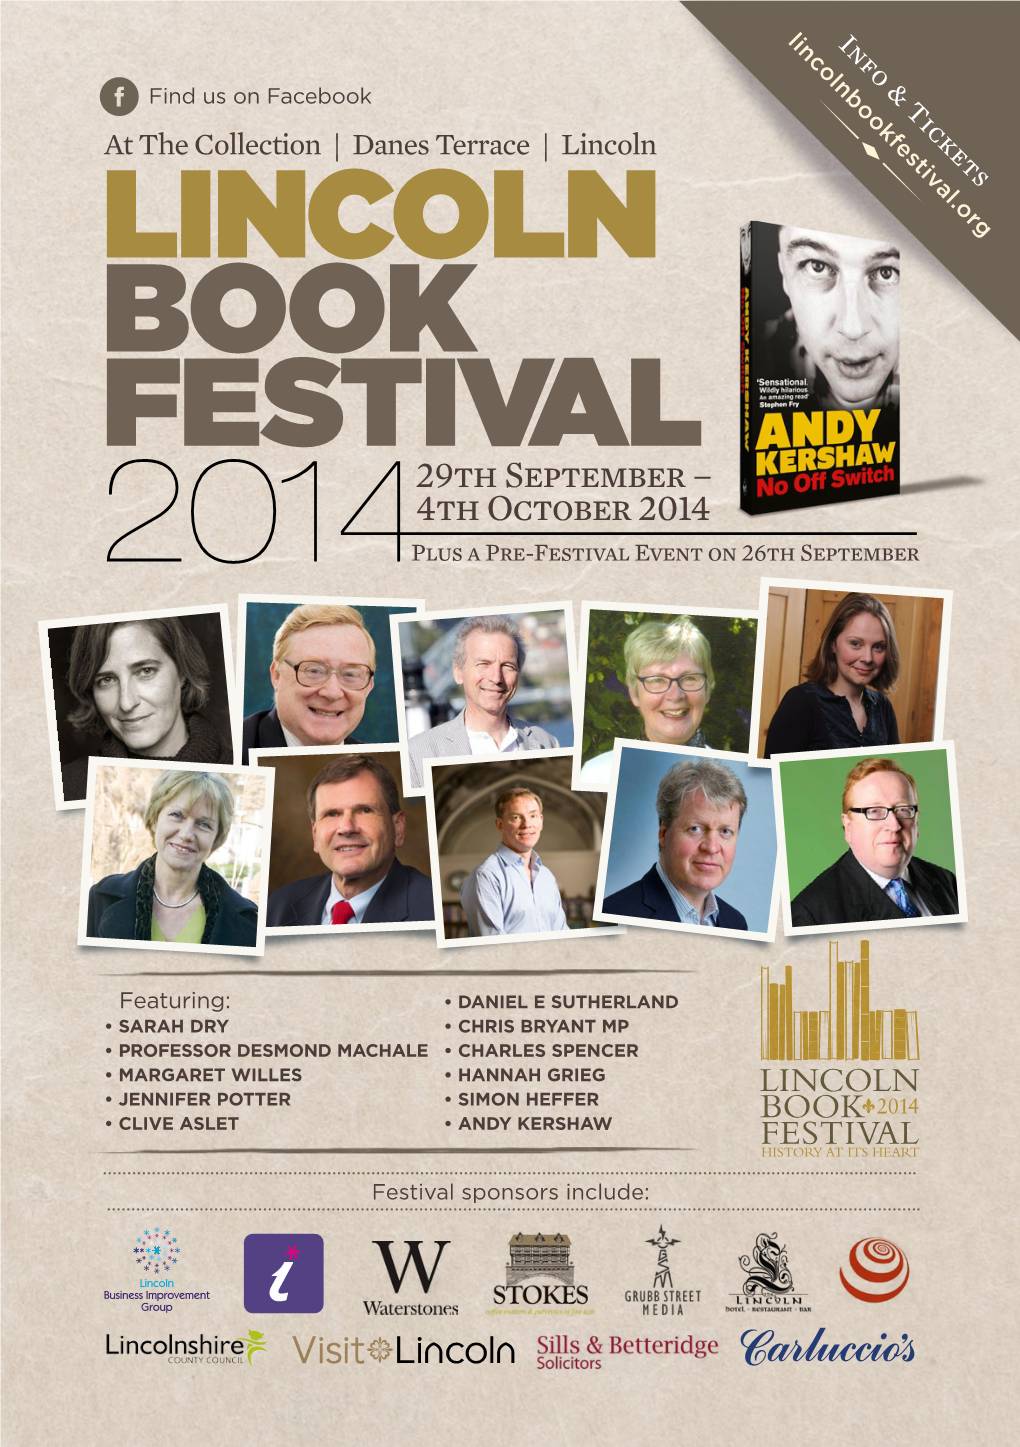 LINCOLN BOOK FESTIVAL 29Th September – 4Th October 2014 Plus a Pre-Festival Event on 26Th September